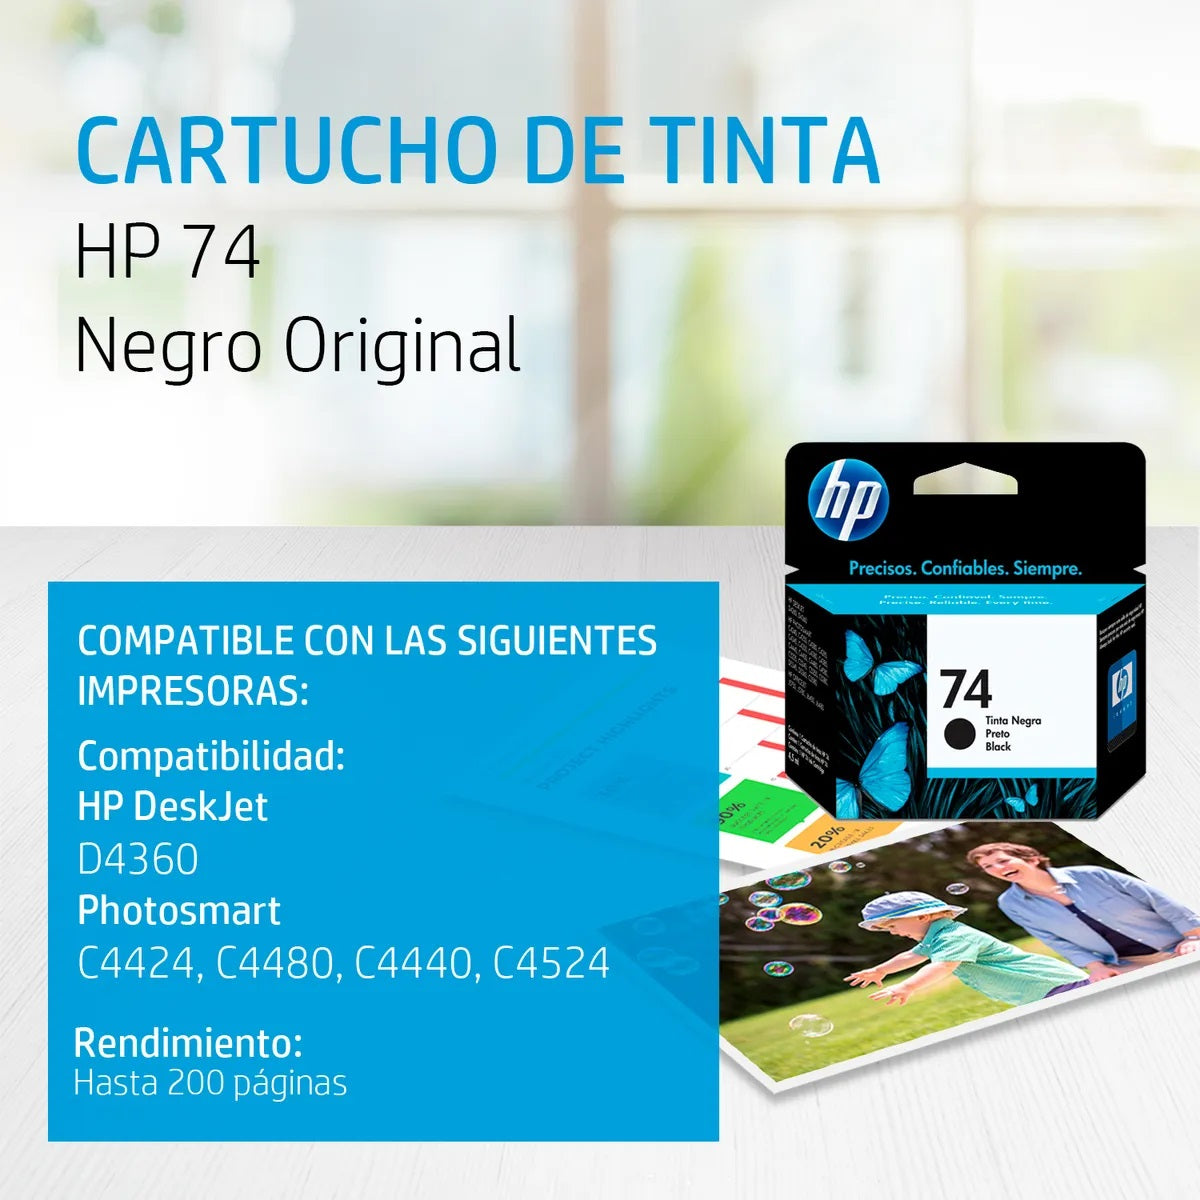 Cartucho de tinta HP 74 negra Original (CB335WL) Para HP Deskjet D4360, Photosmart C4424, C4480, C4440, C4524